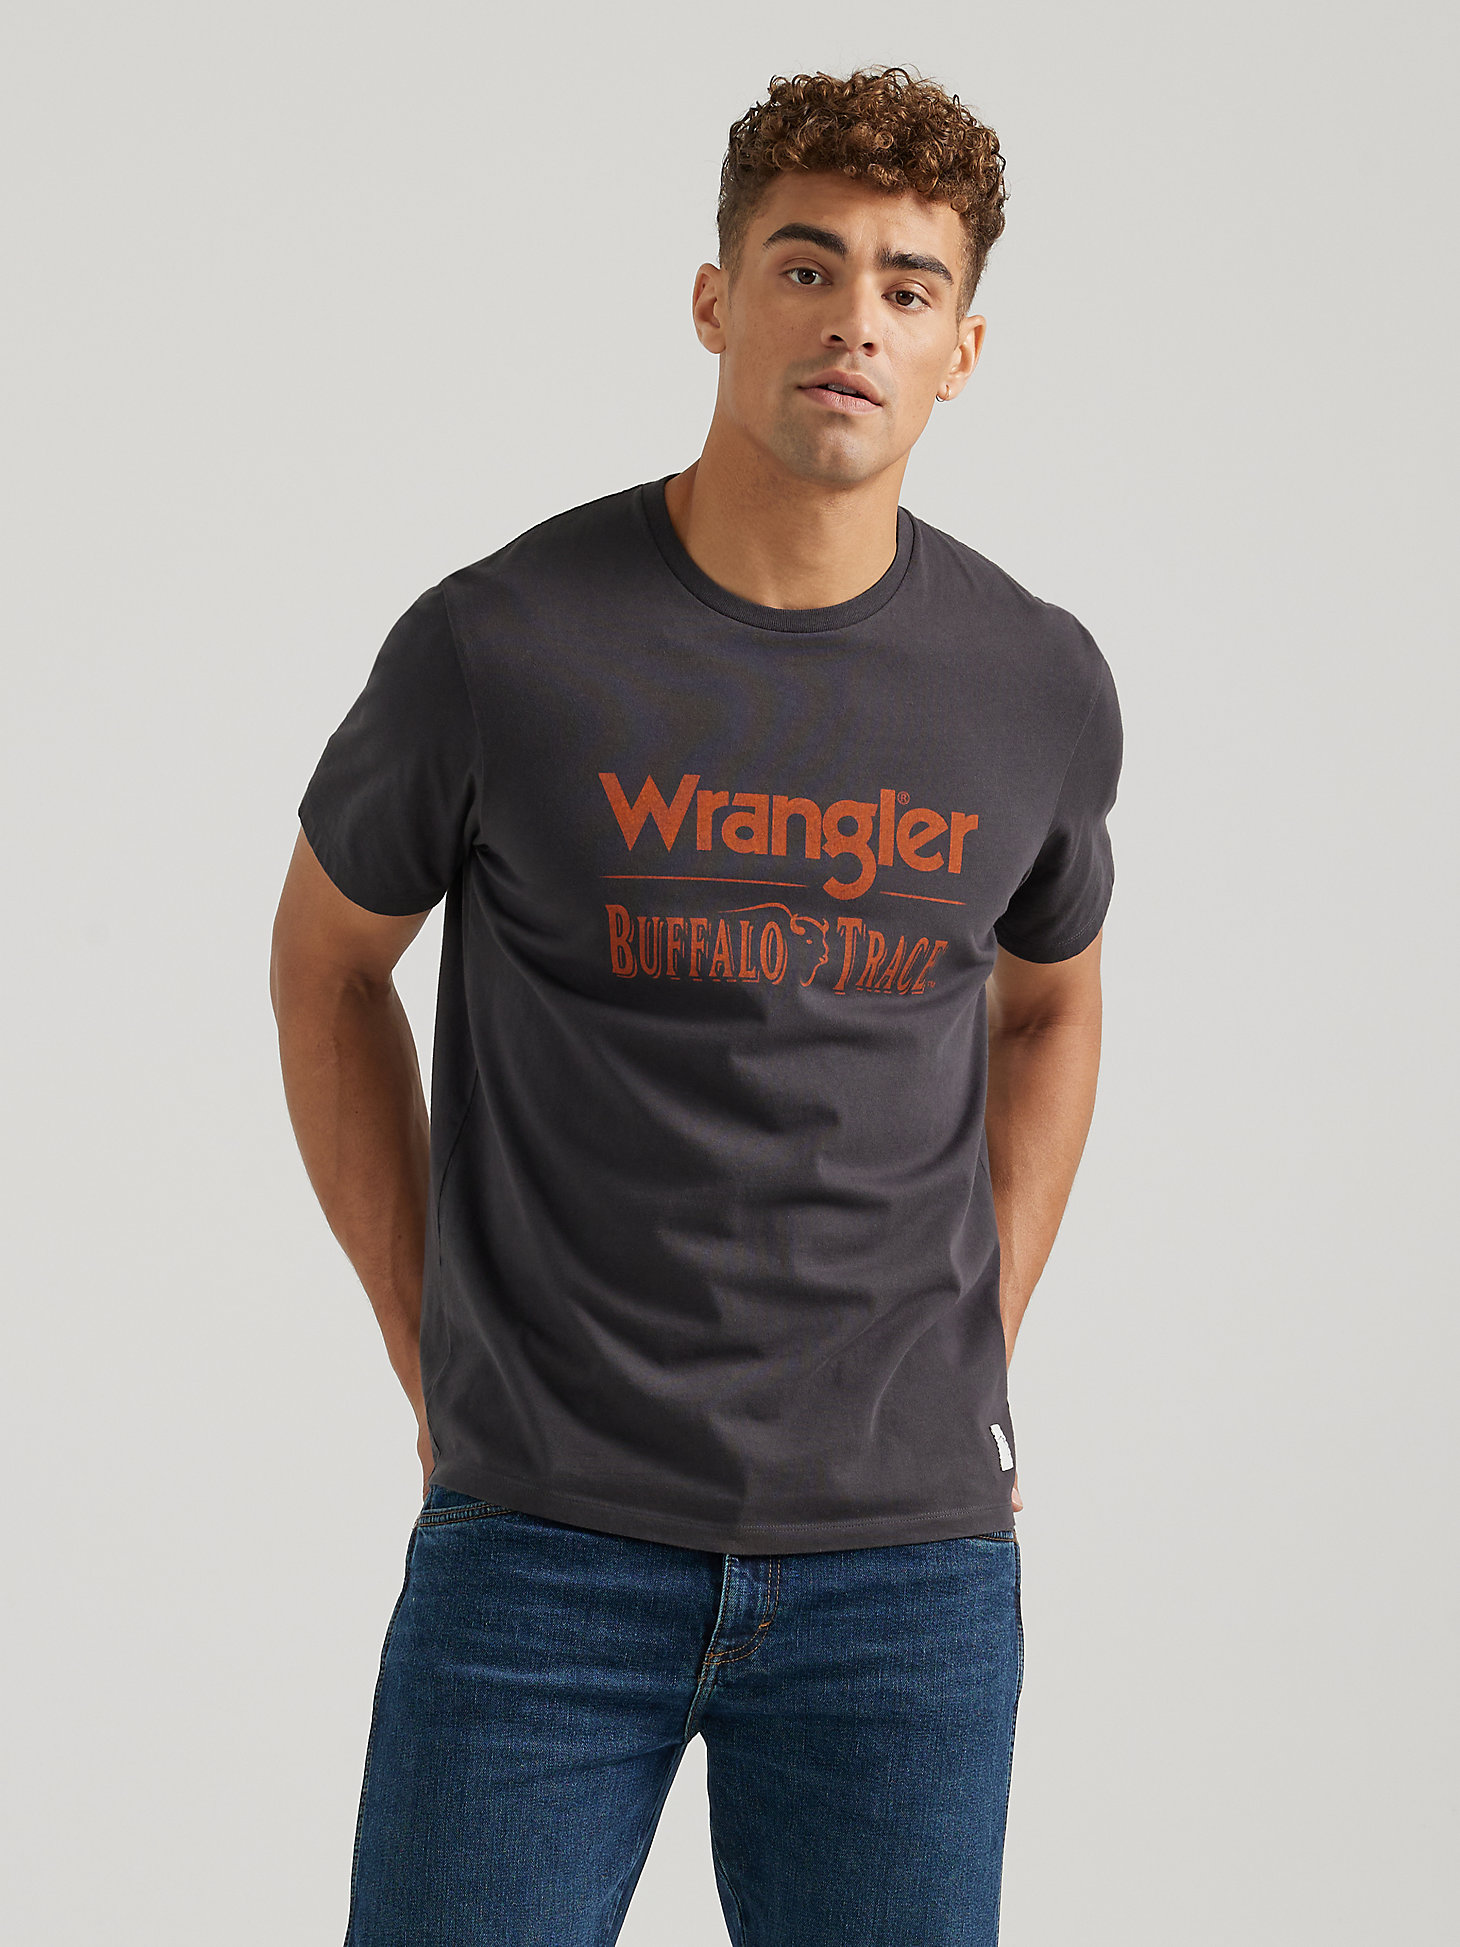 Wrangler x Buffalo Trace™ Men's Logo T-Shirt in Dark Grey alternative view 5